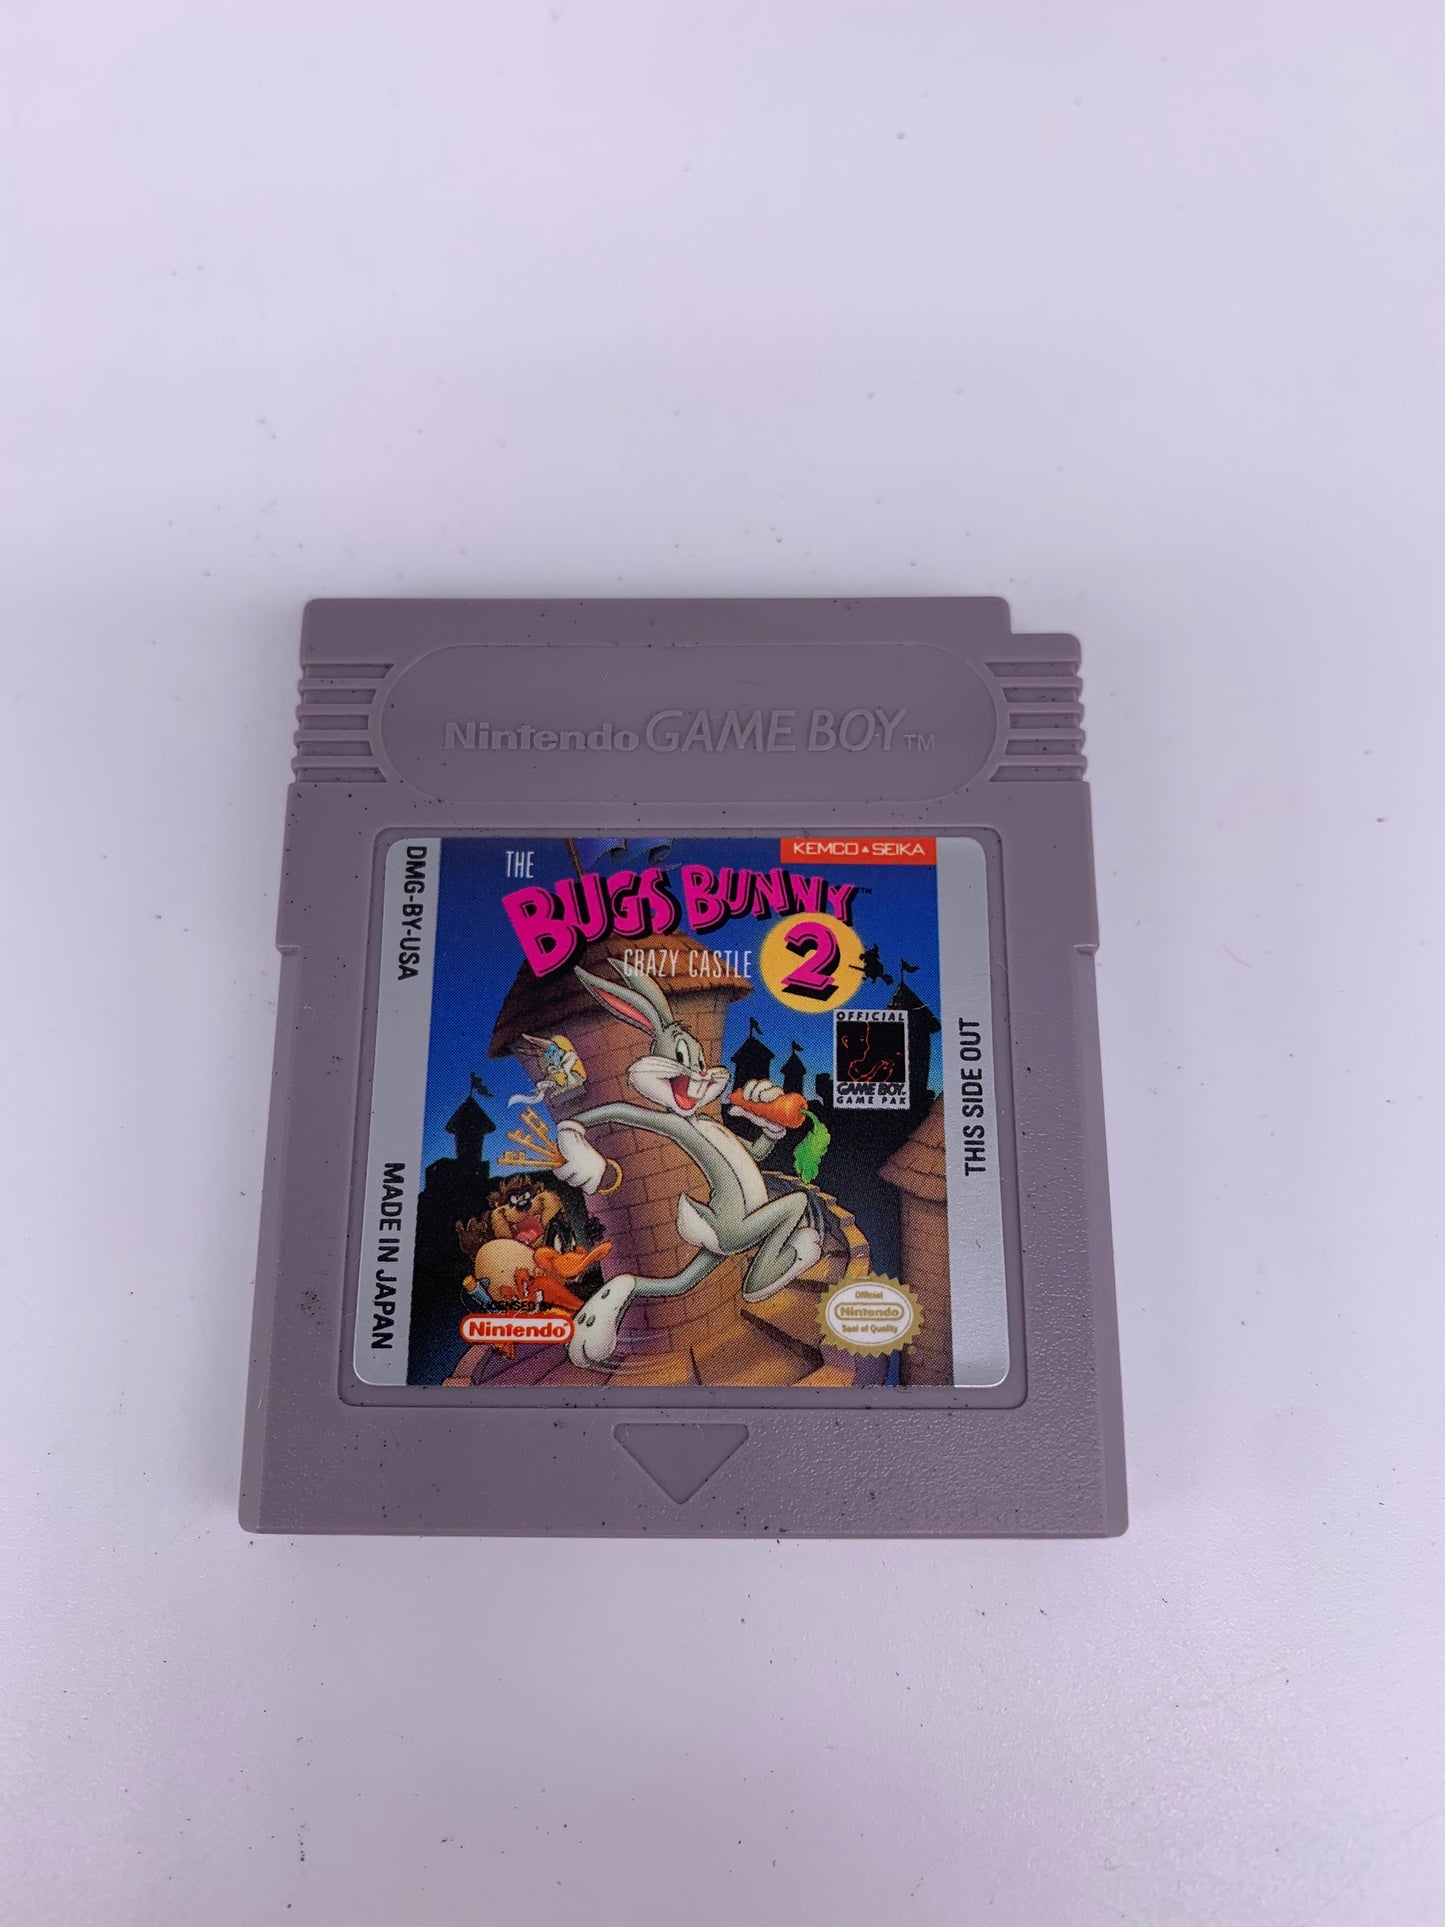 PiXEL-RETRO.COM : GAME BOY GAMEBOY (GB) GAME NTSC THE BUGS BUNNY CRAZY CASTLE 2